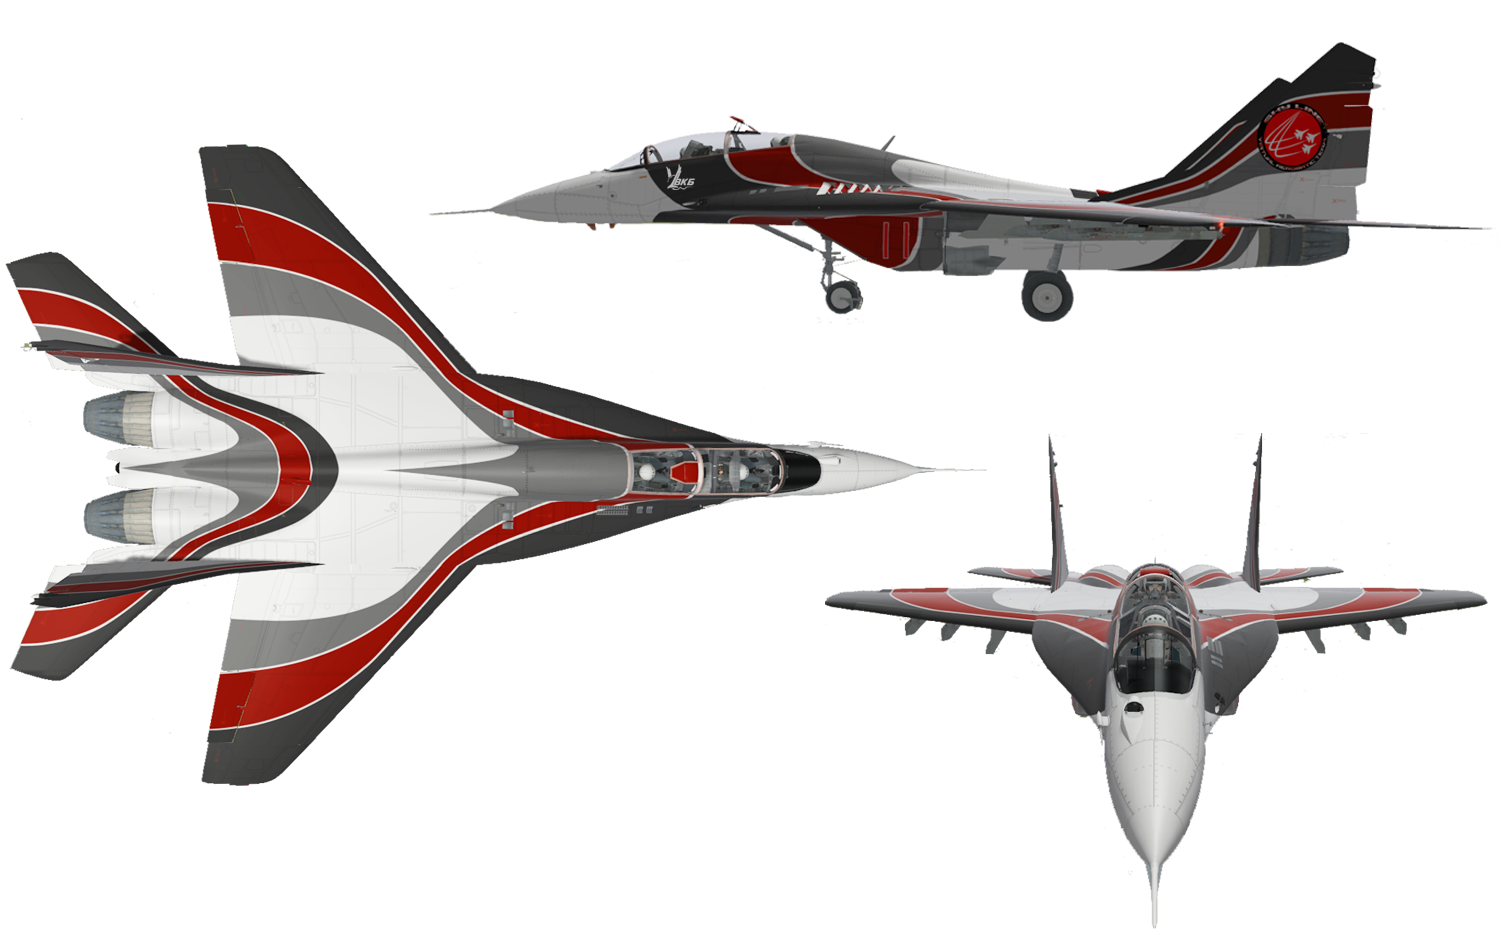 VAT Skyline MiG-29UB Technical Characteristics